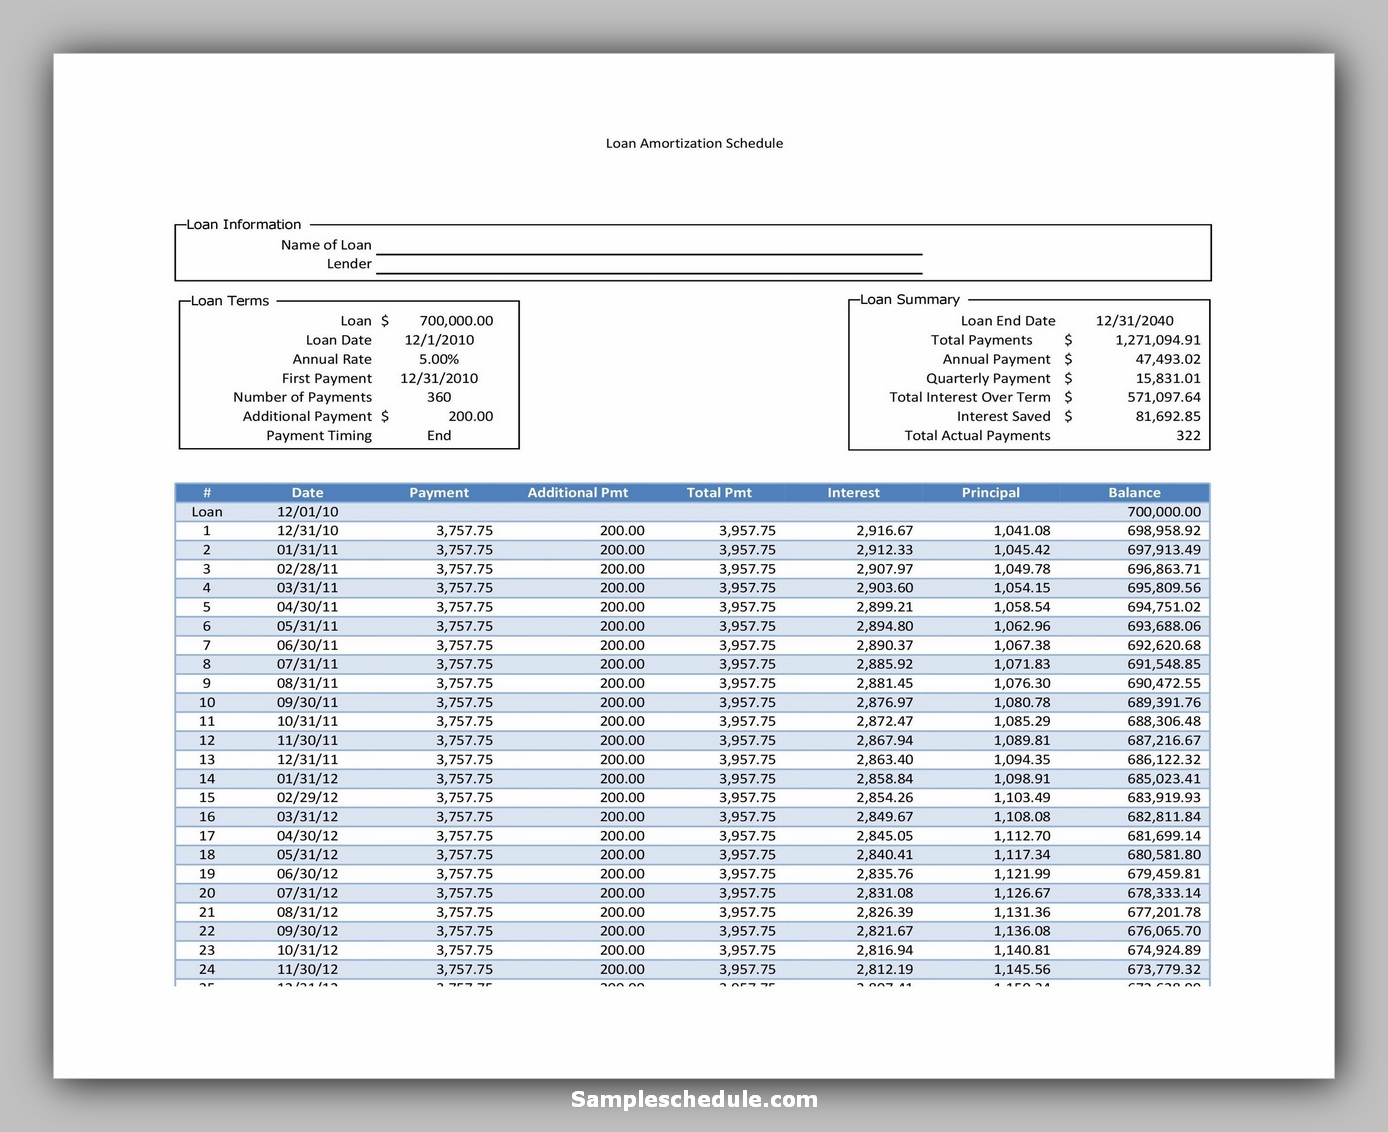 20 Loan Amortization Schedule Excel Sample Schedule 4100